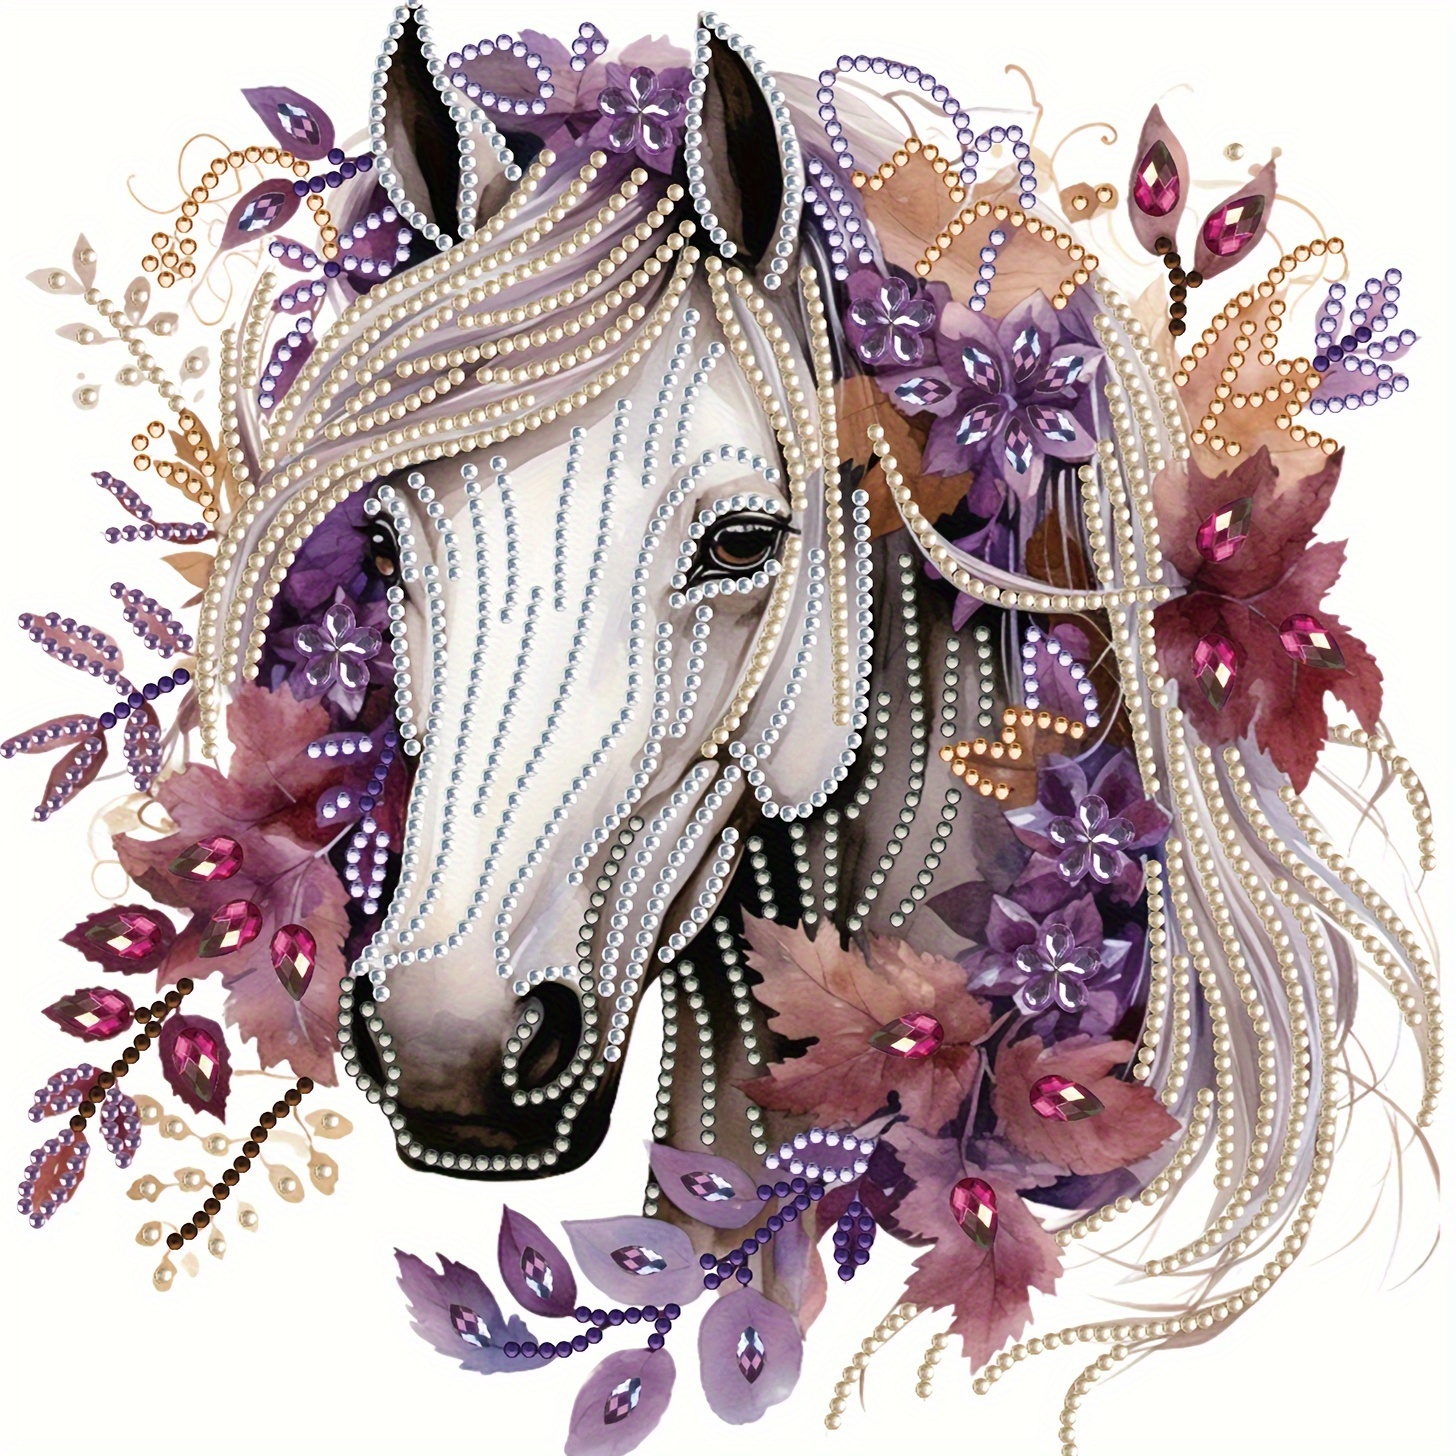 Diamond Painting White Horse Resinstones Embroidery Diamond Paint